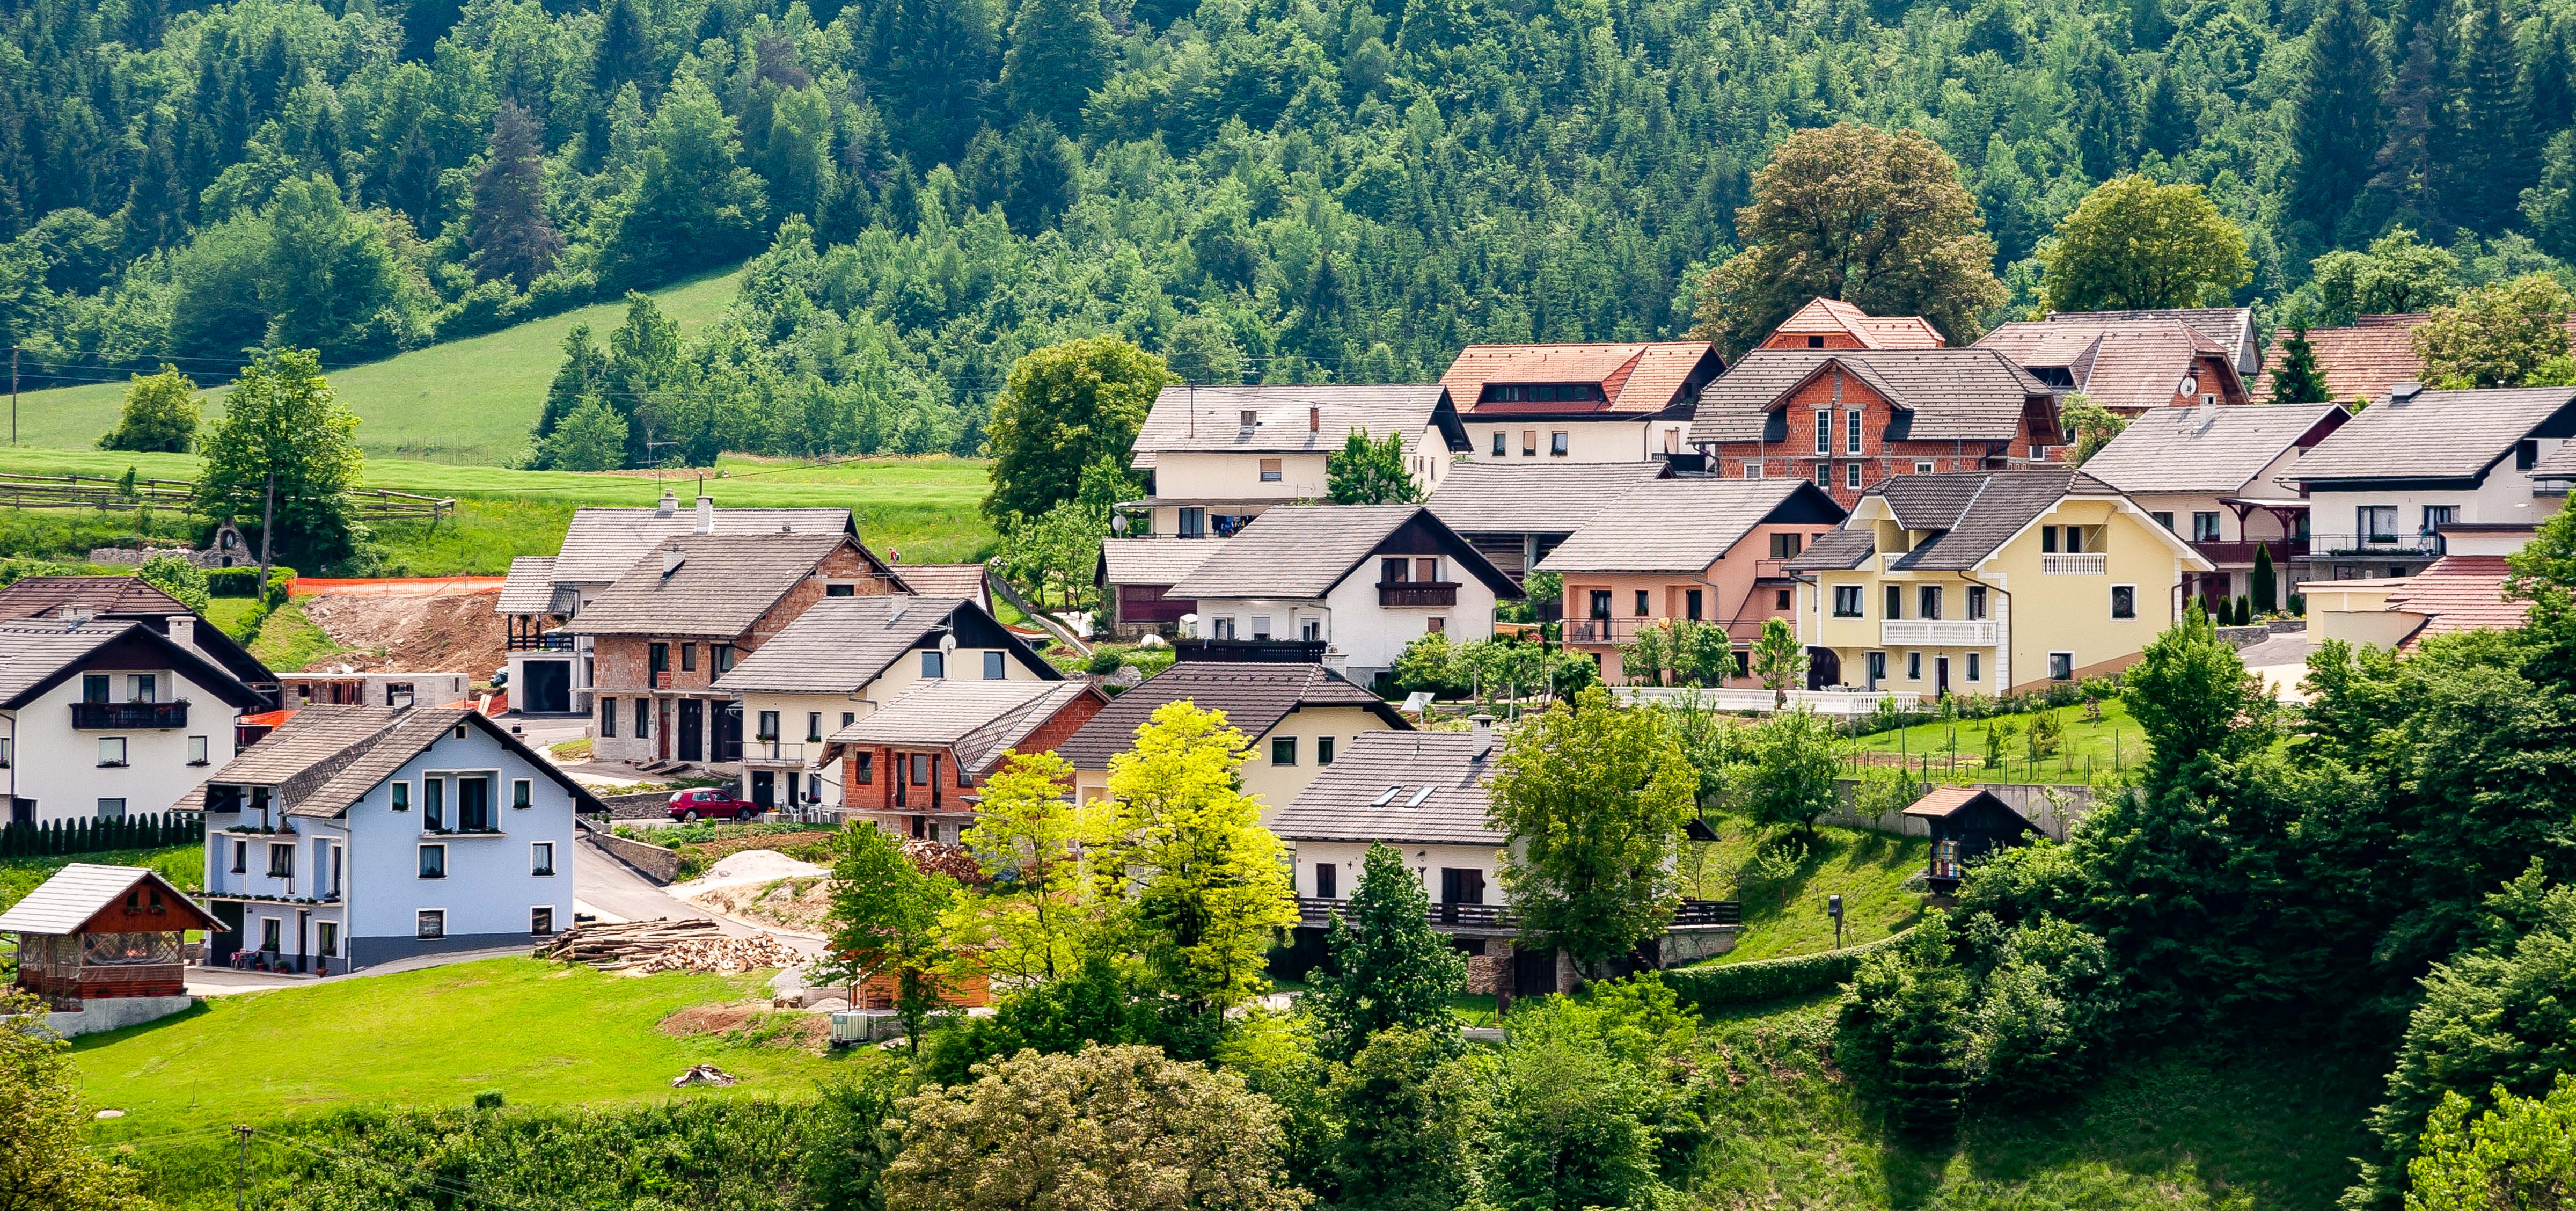 Slovenia, Zuzemberk Prov, Village, 2006, IMG 7536